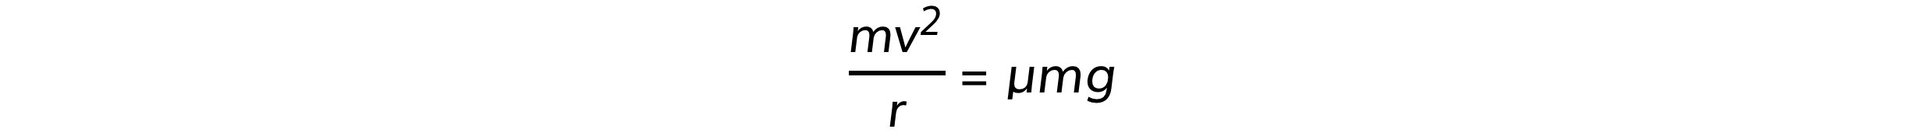 6.1.4-Equation-1